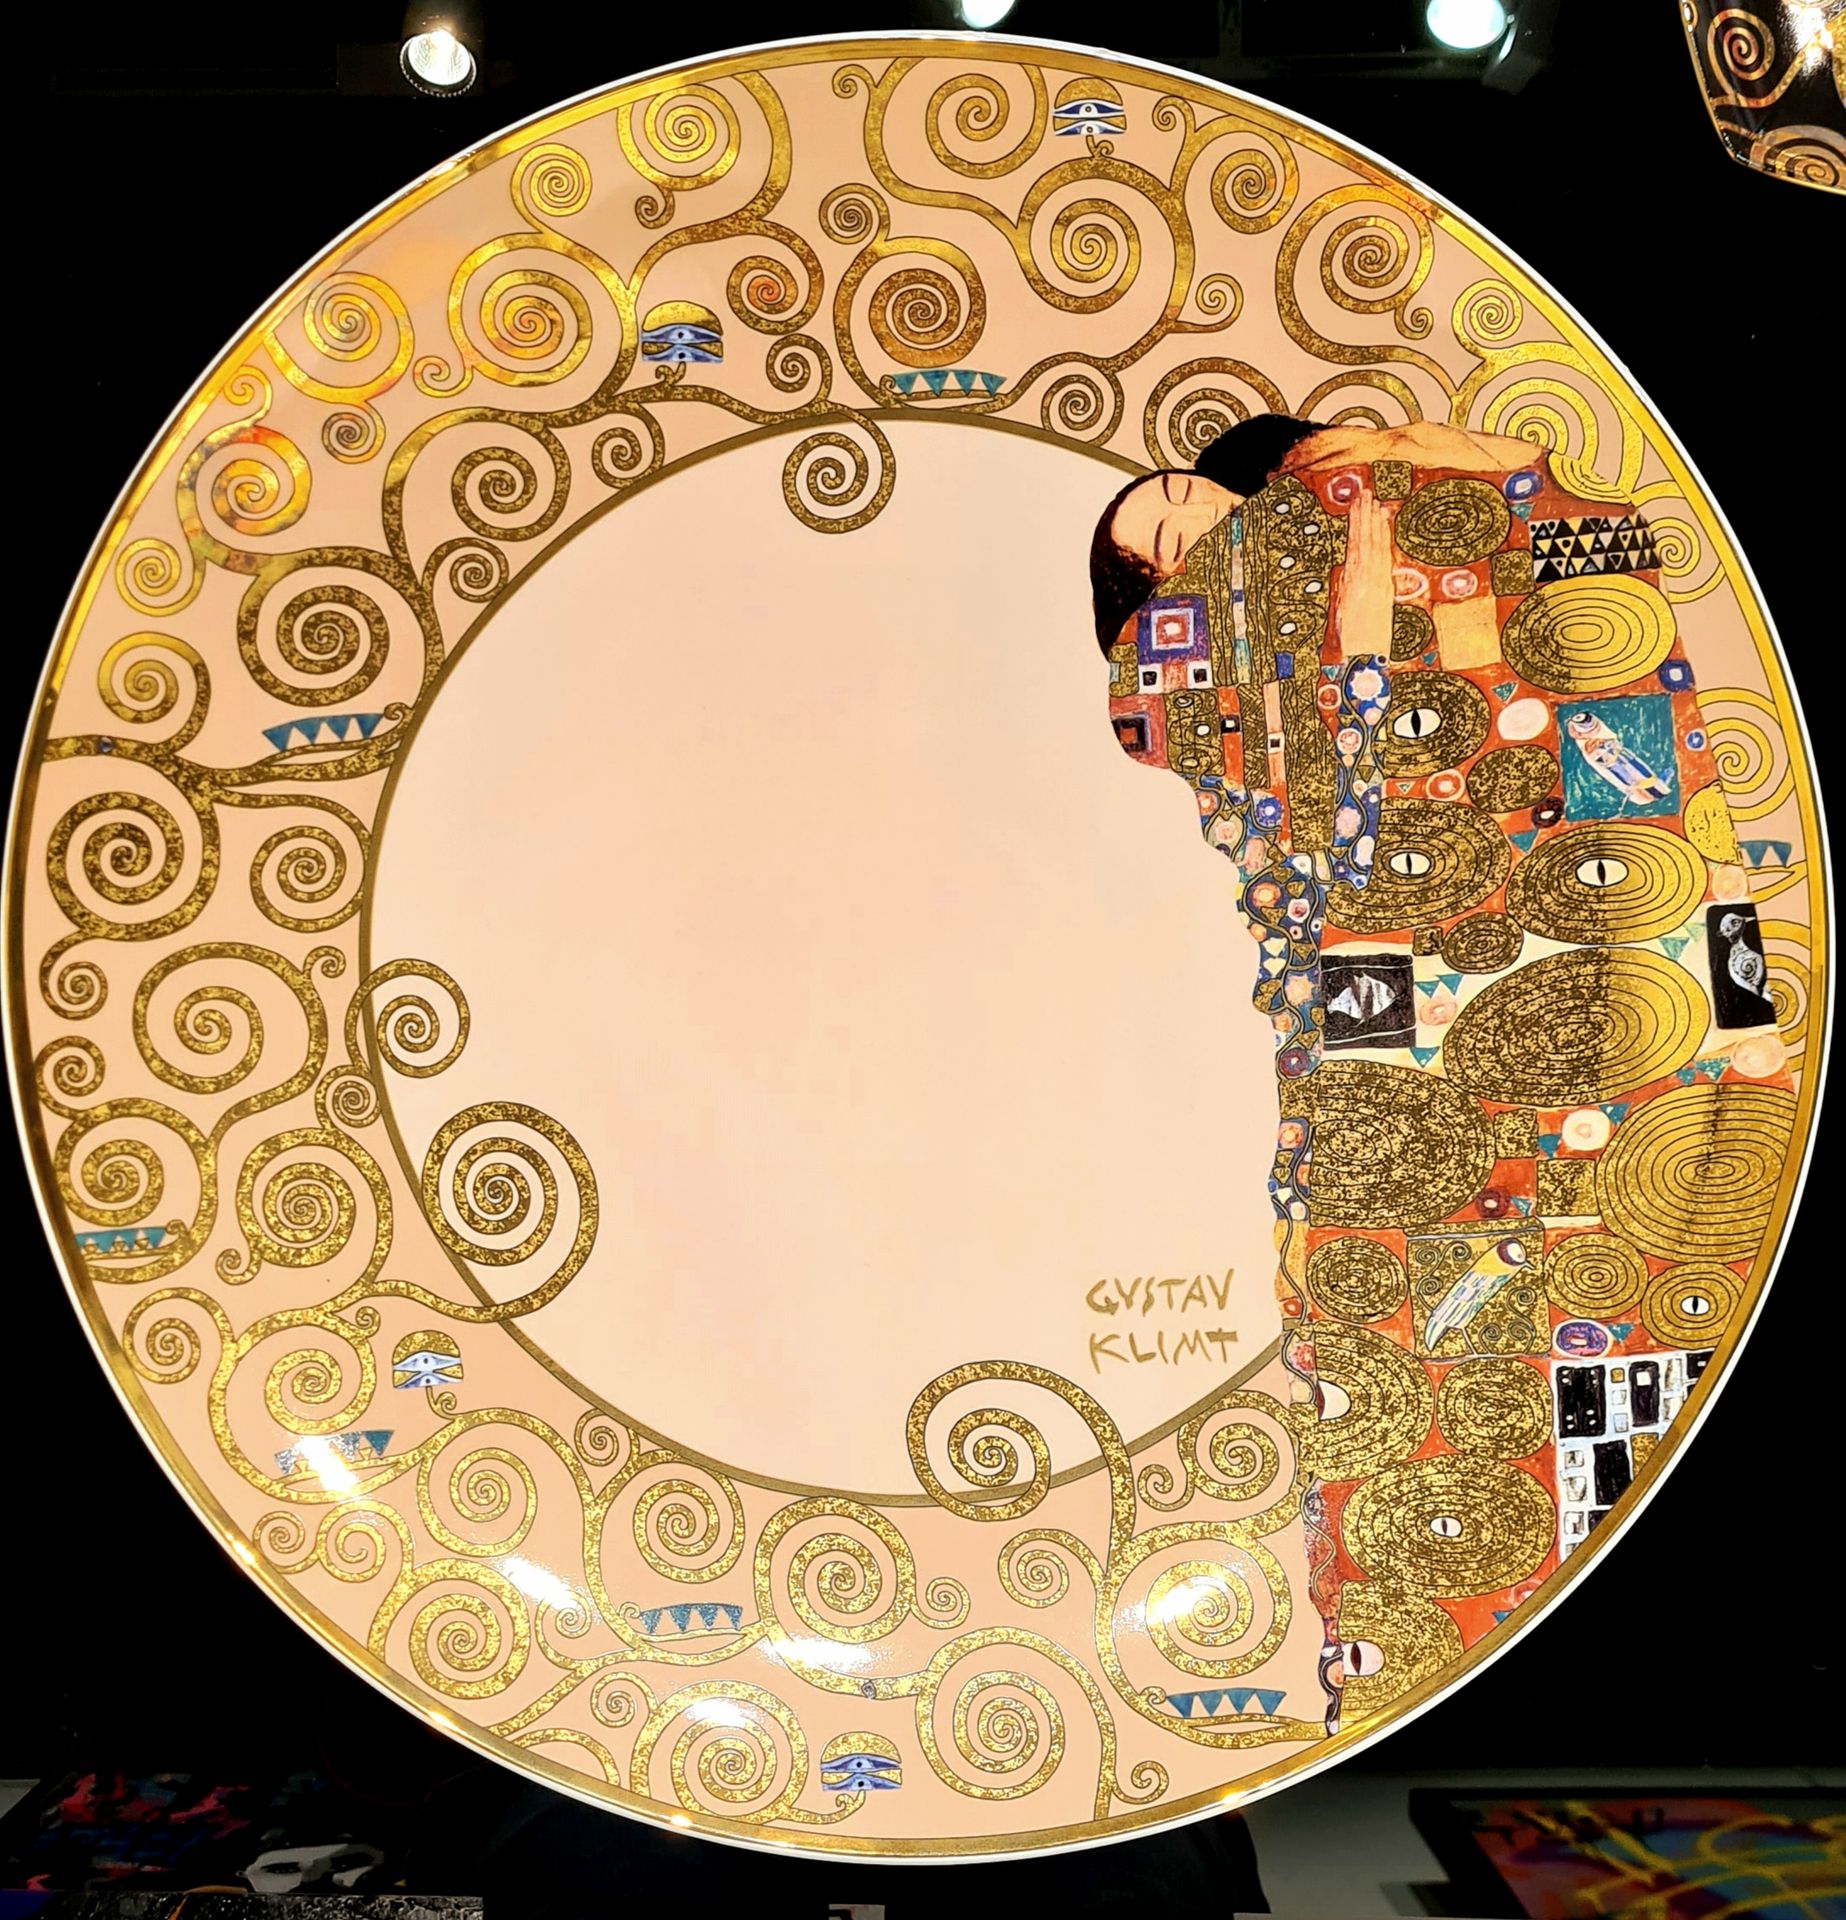 Assiette en porcelaine 表现古斯塔夫-克里姆特作品的瓷盘

板块中的签名

编号为160/1000册

出版商 : Goebel

直径：&hellip;